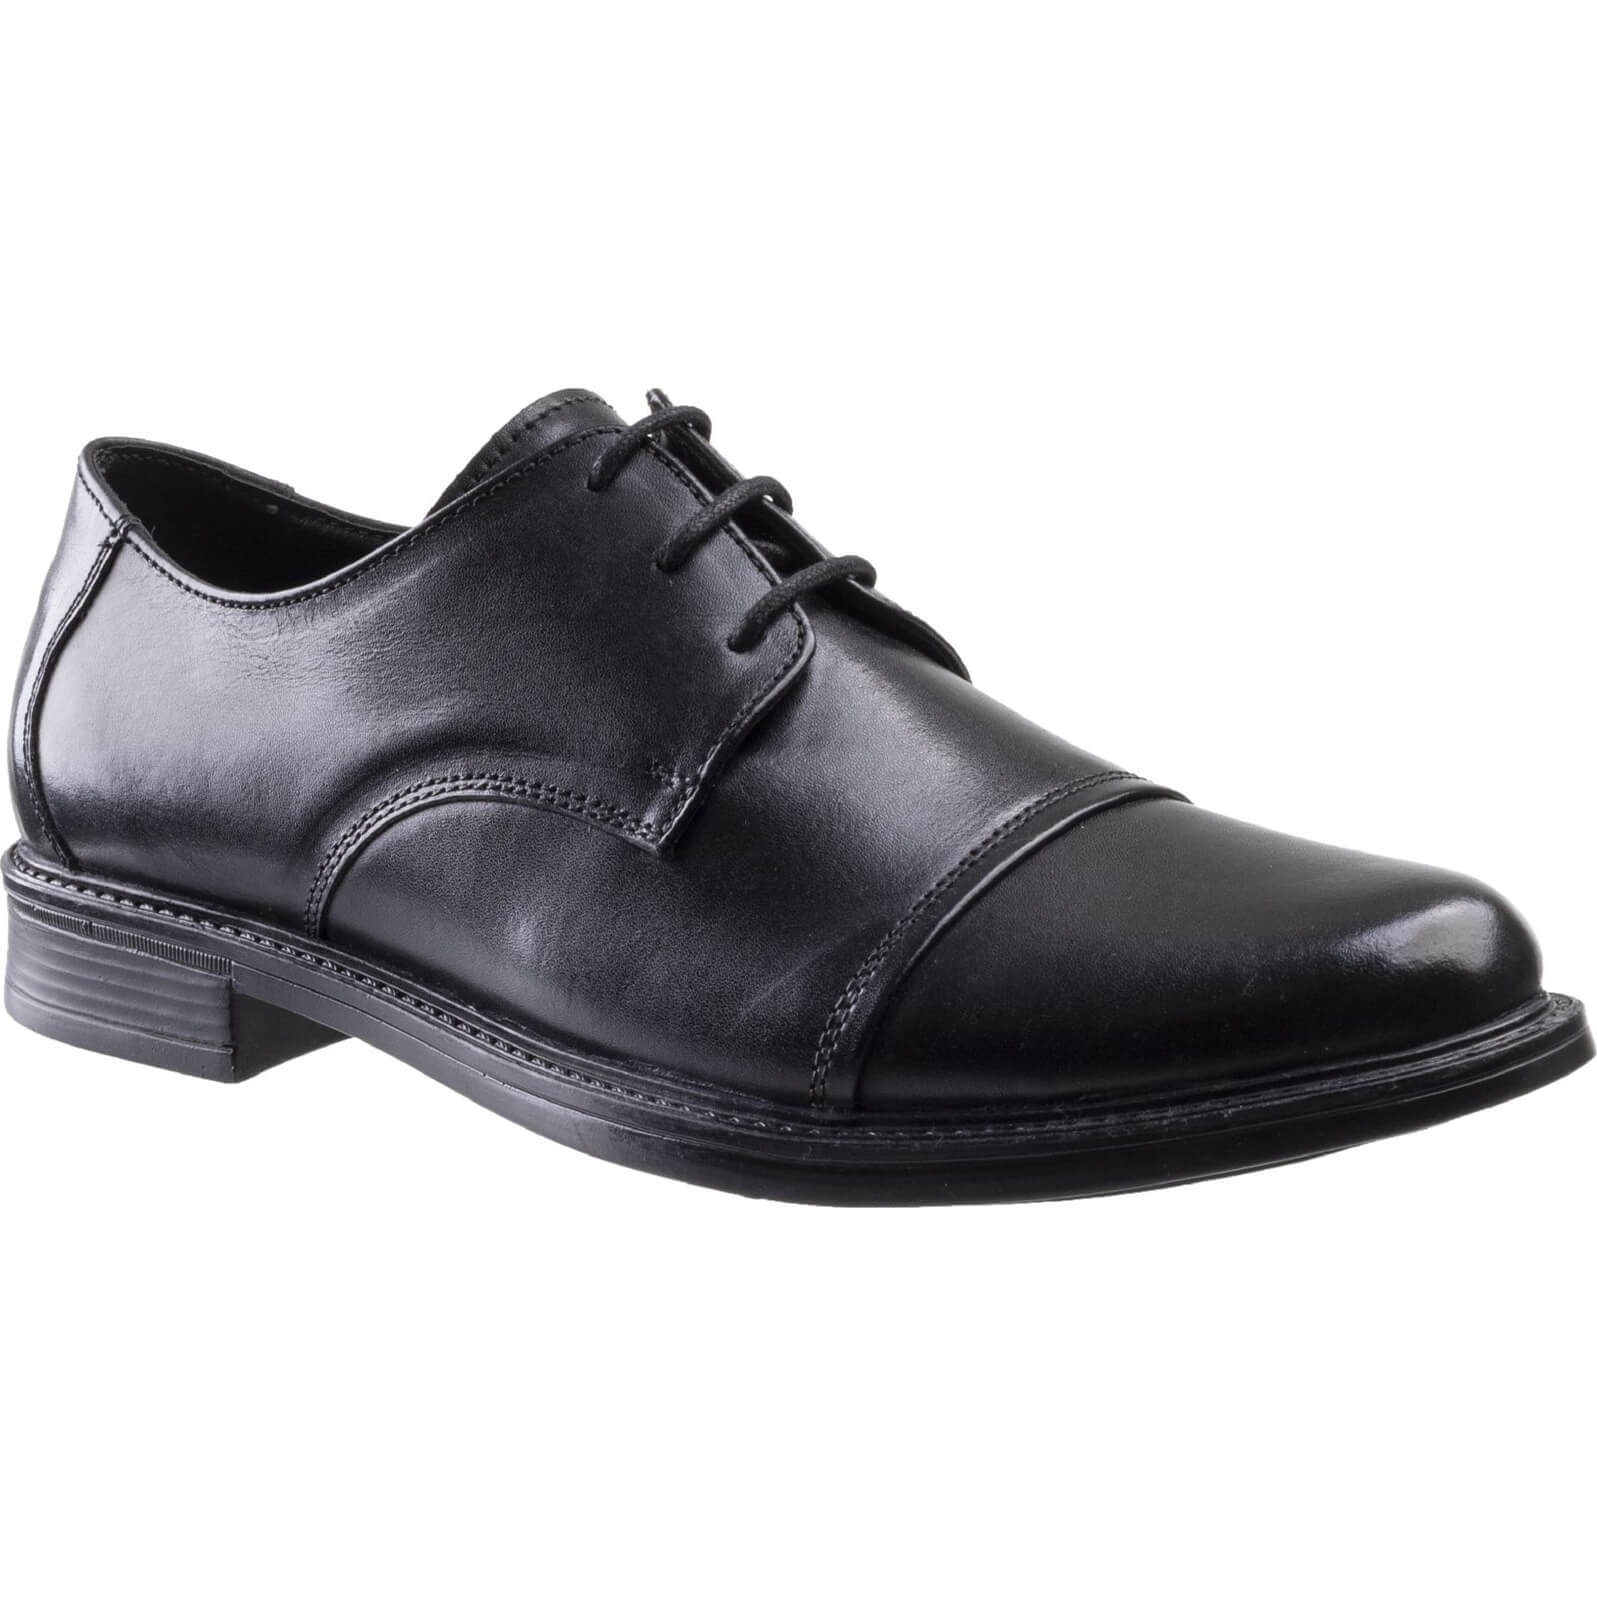 Image of Amblers Bristol Lace Up Shoe Black Size 11